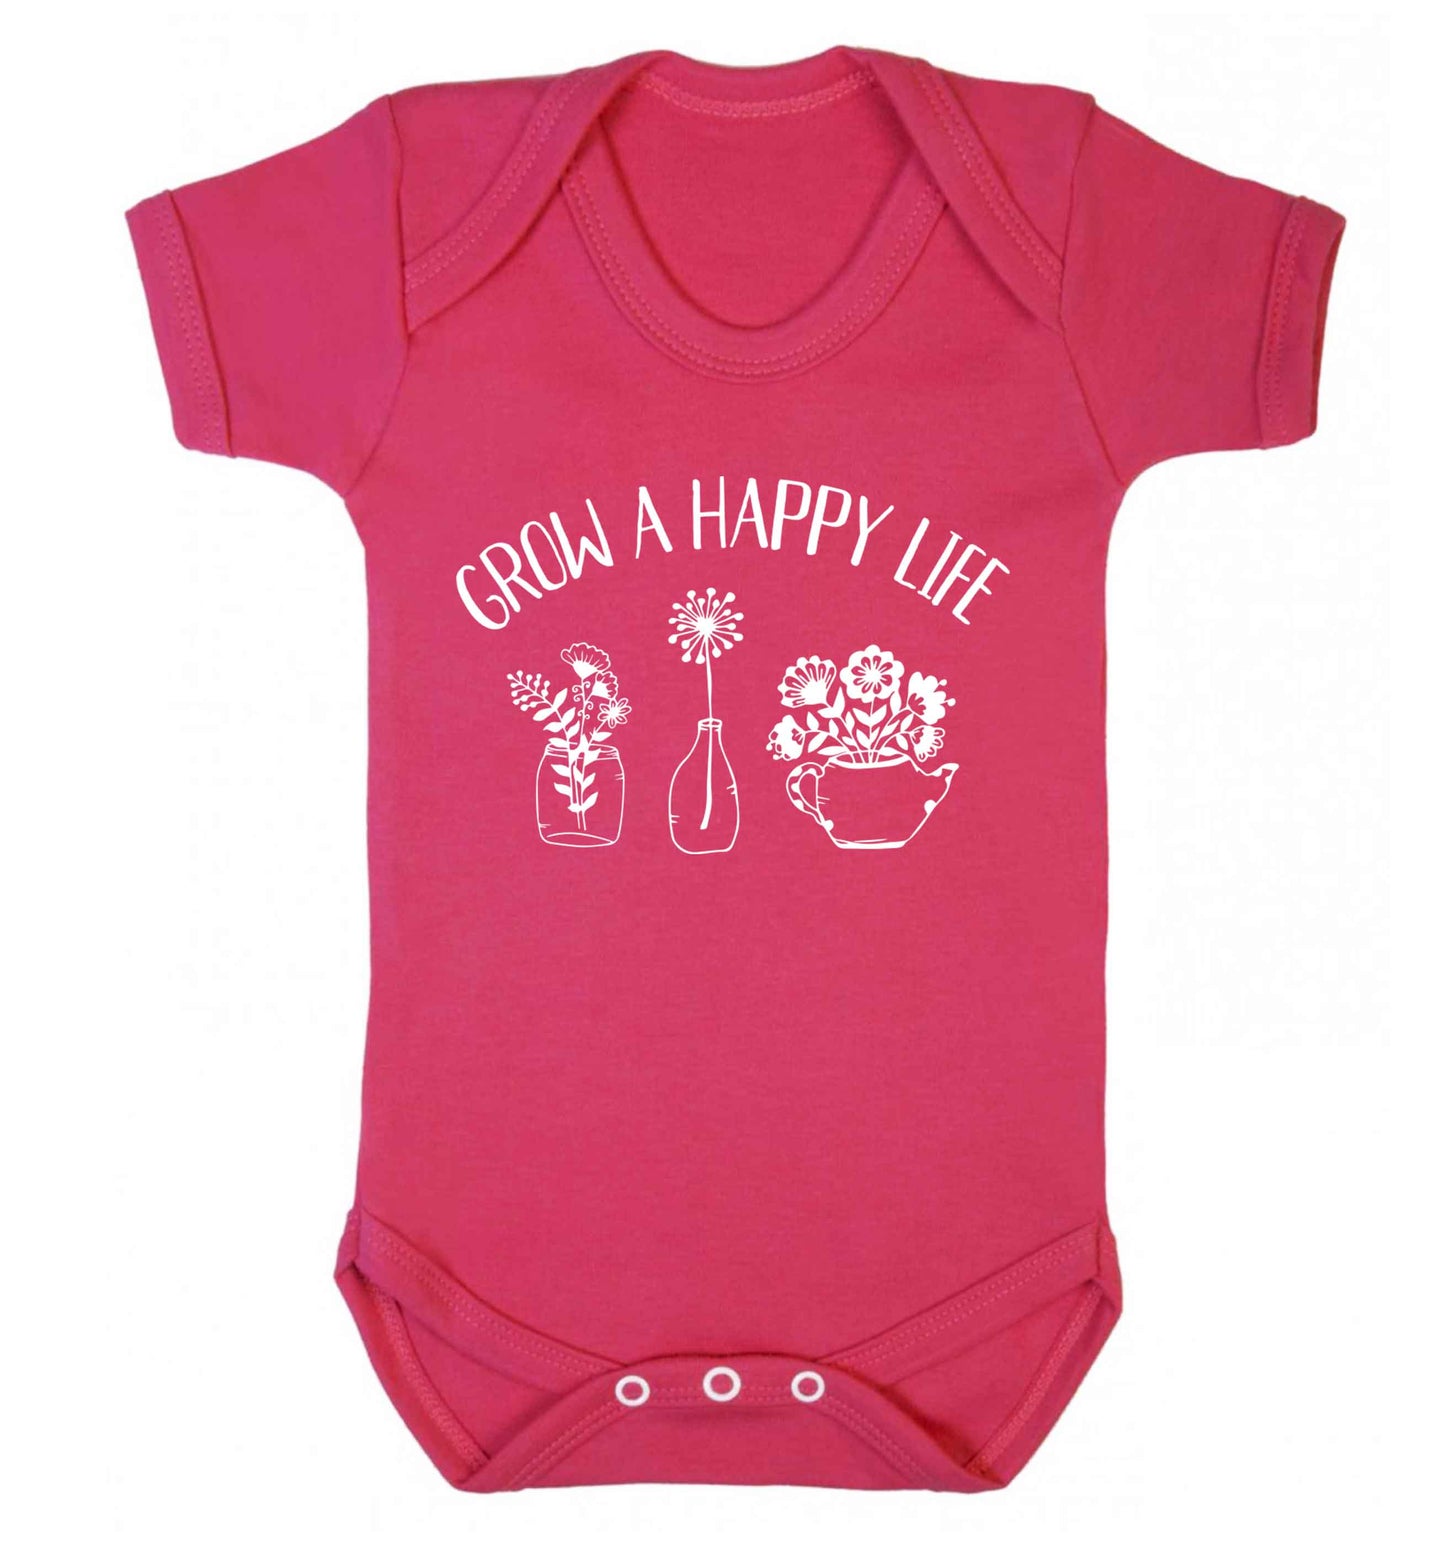 Grow a happy life Baby Vest dark pink 18-24 months